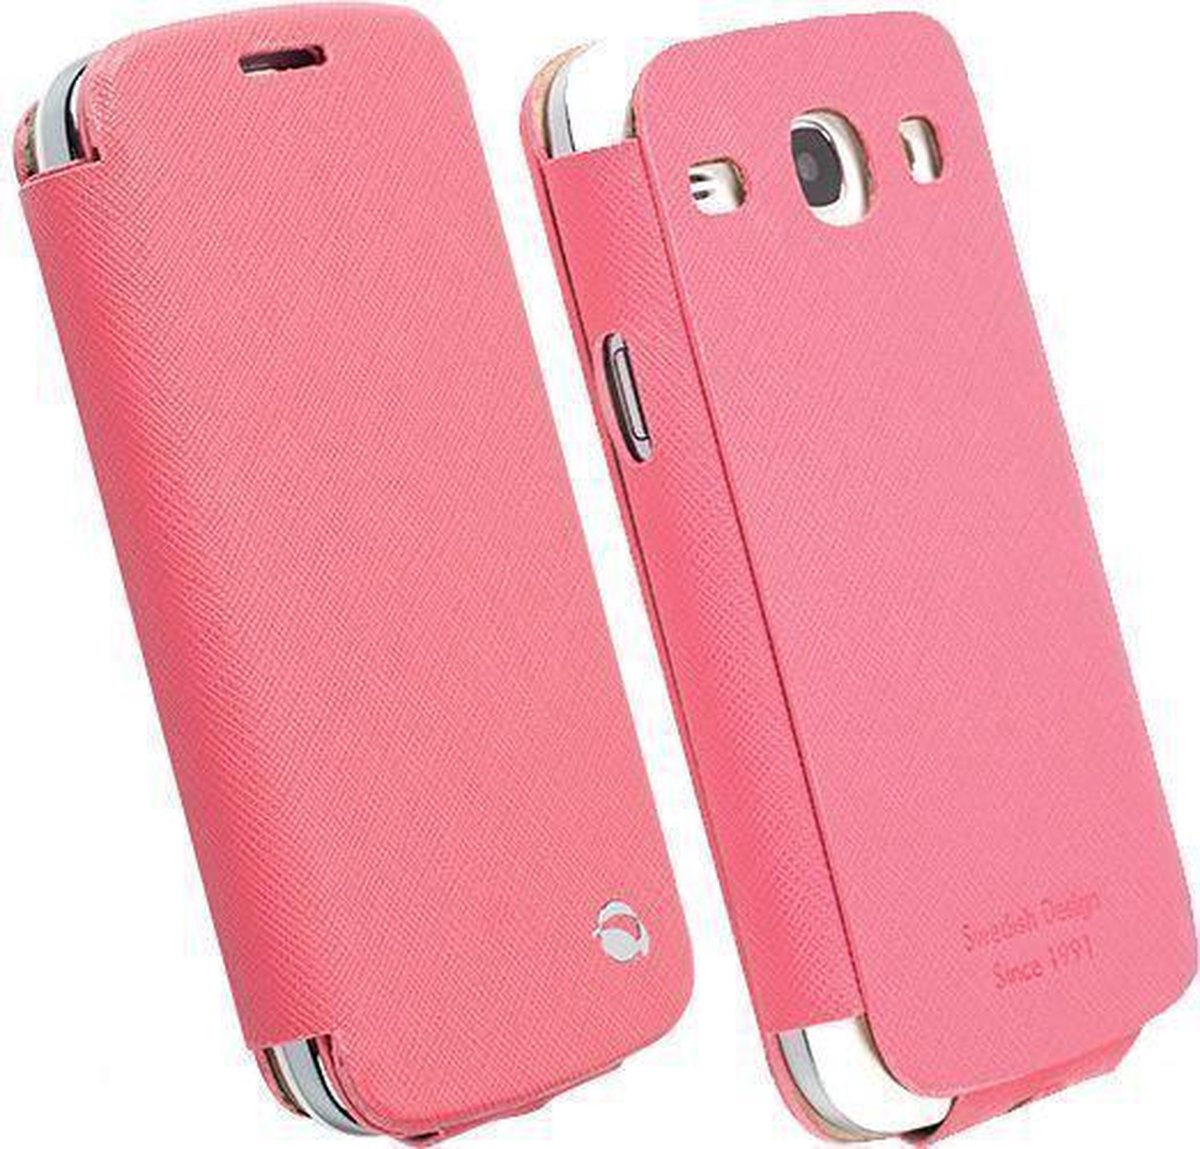 Krusell FlipCover Malmo voor de Samsung Galaxy Core (pink)